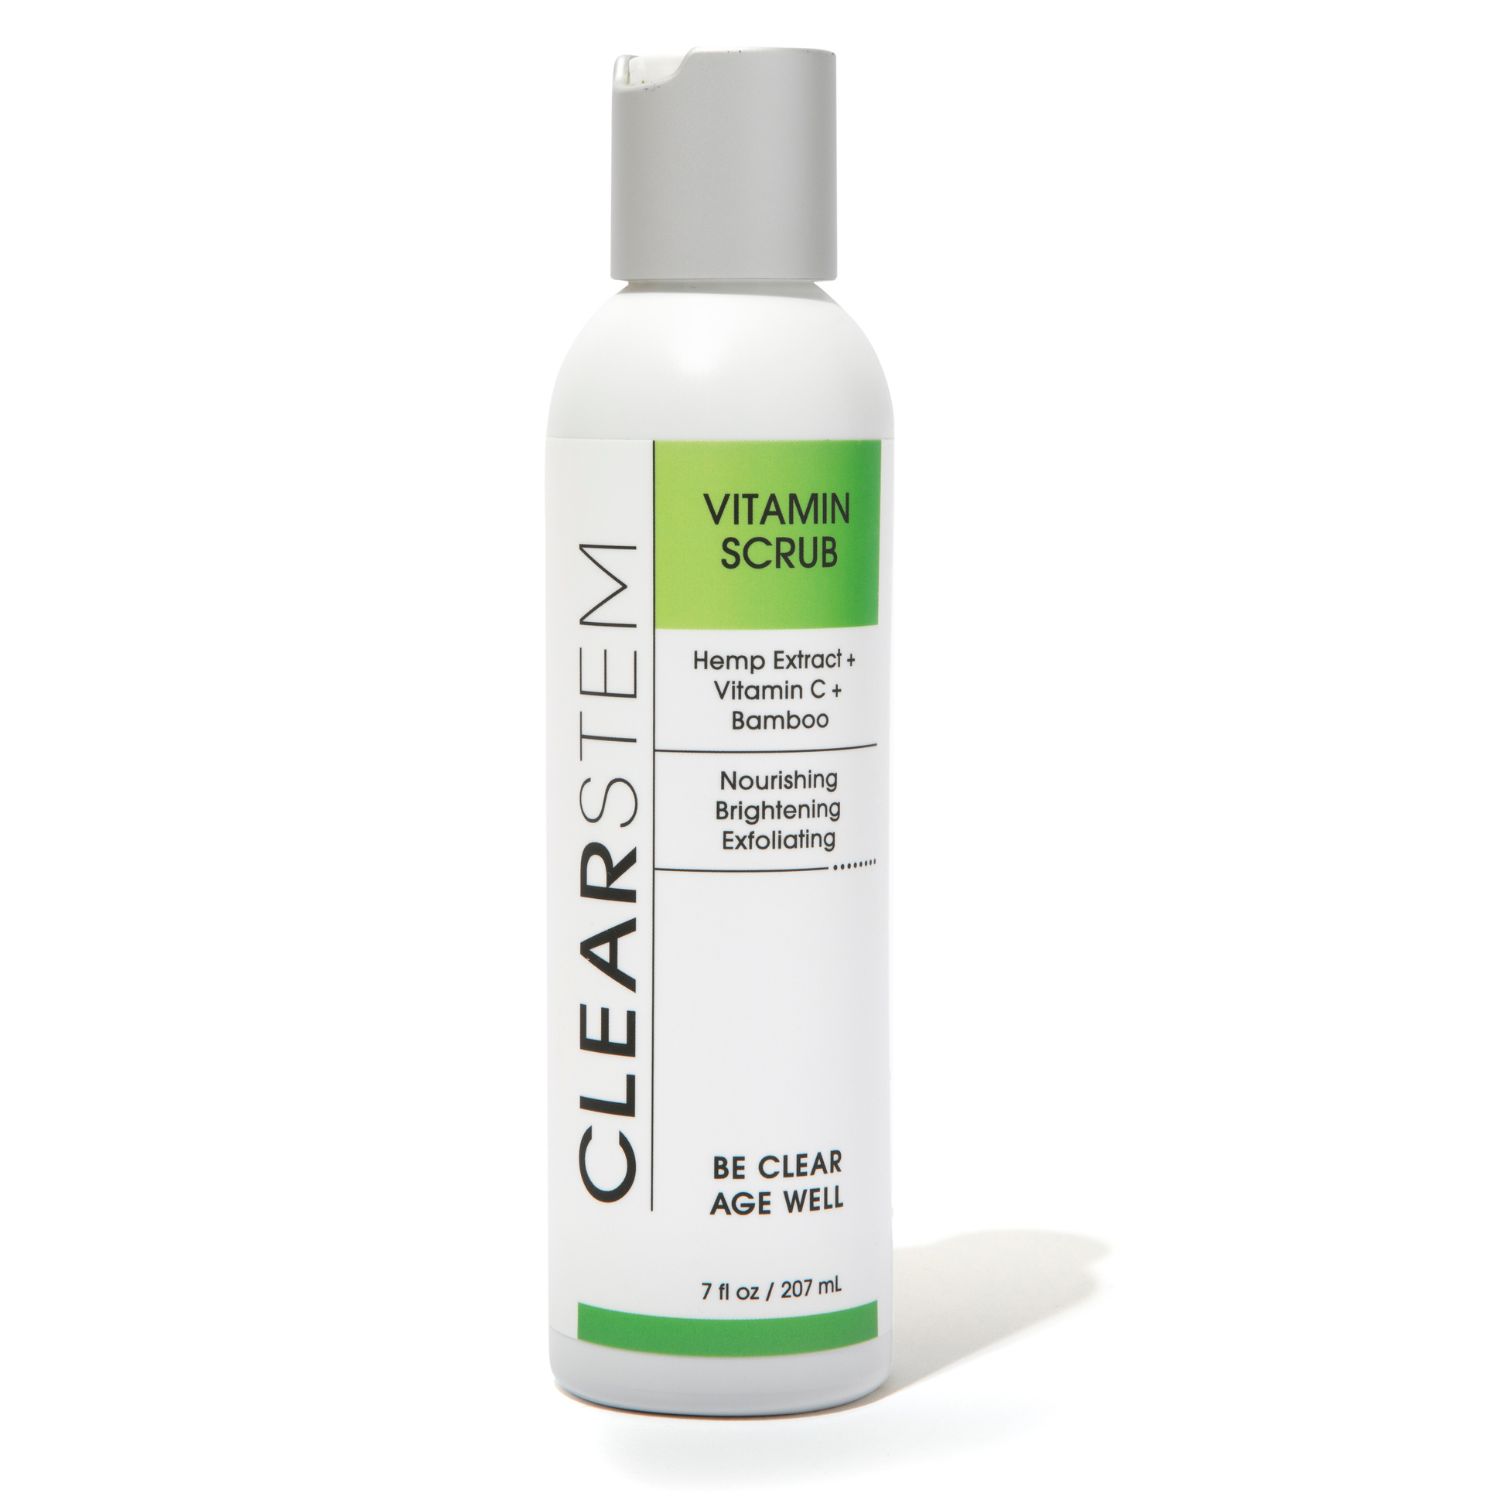 Green Vitaminscrub Clearstem Skincare